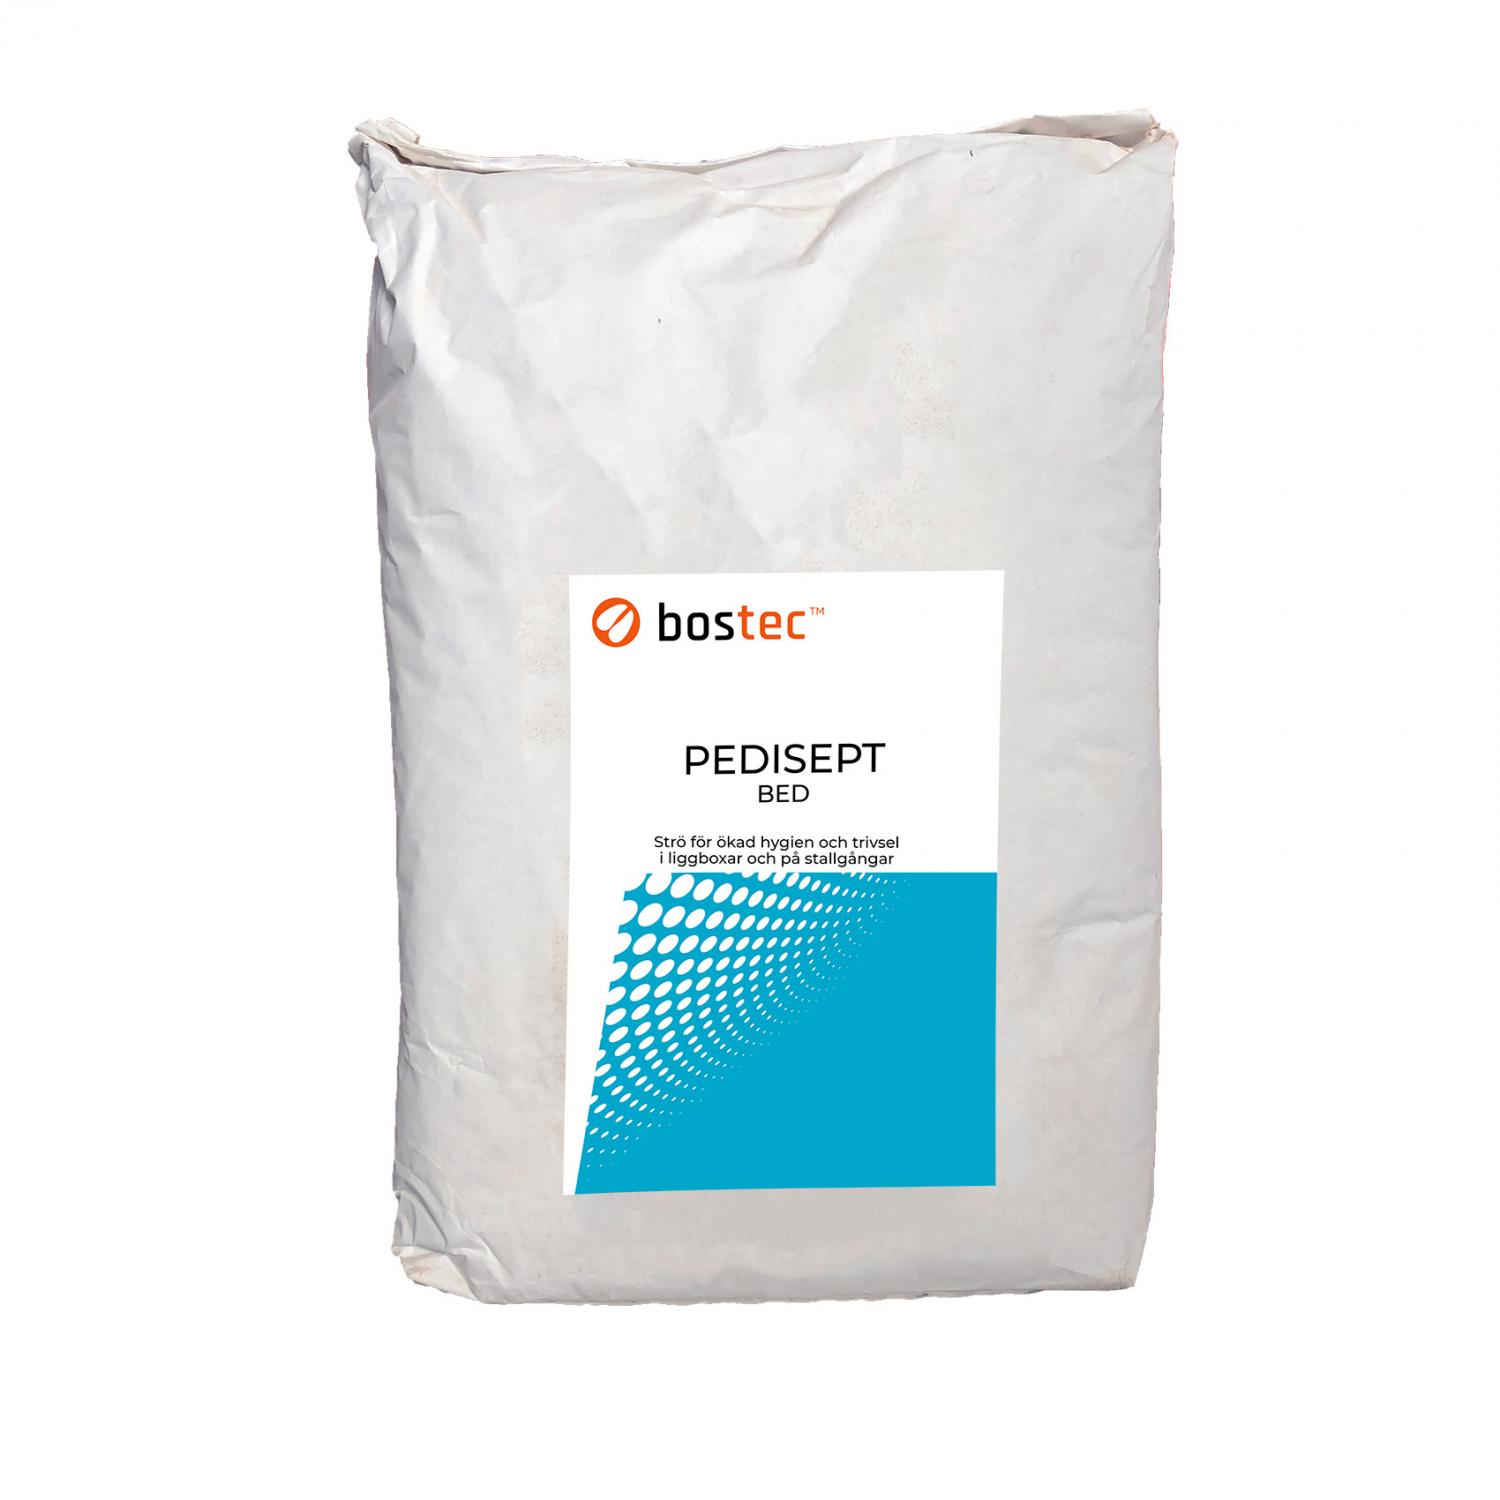 Bostec™ Pedisept Bed - 25kg